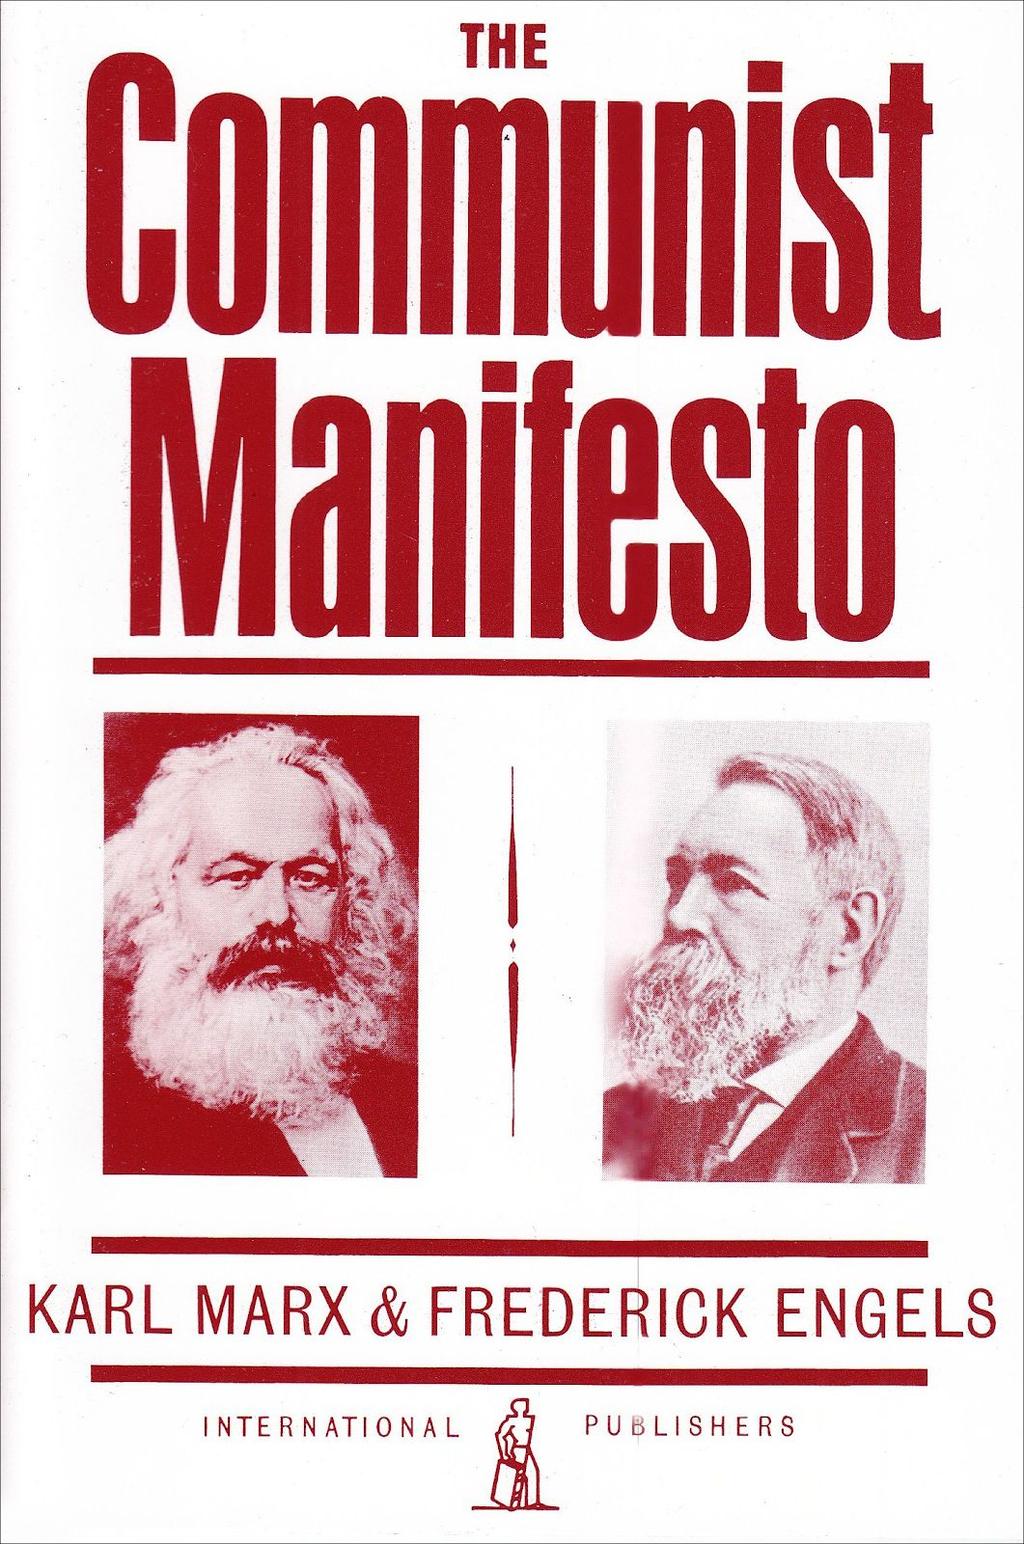 of Karl Marx.